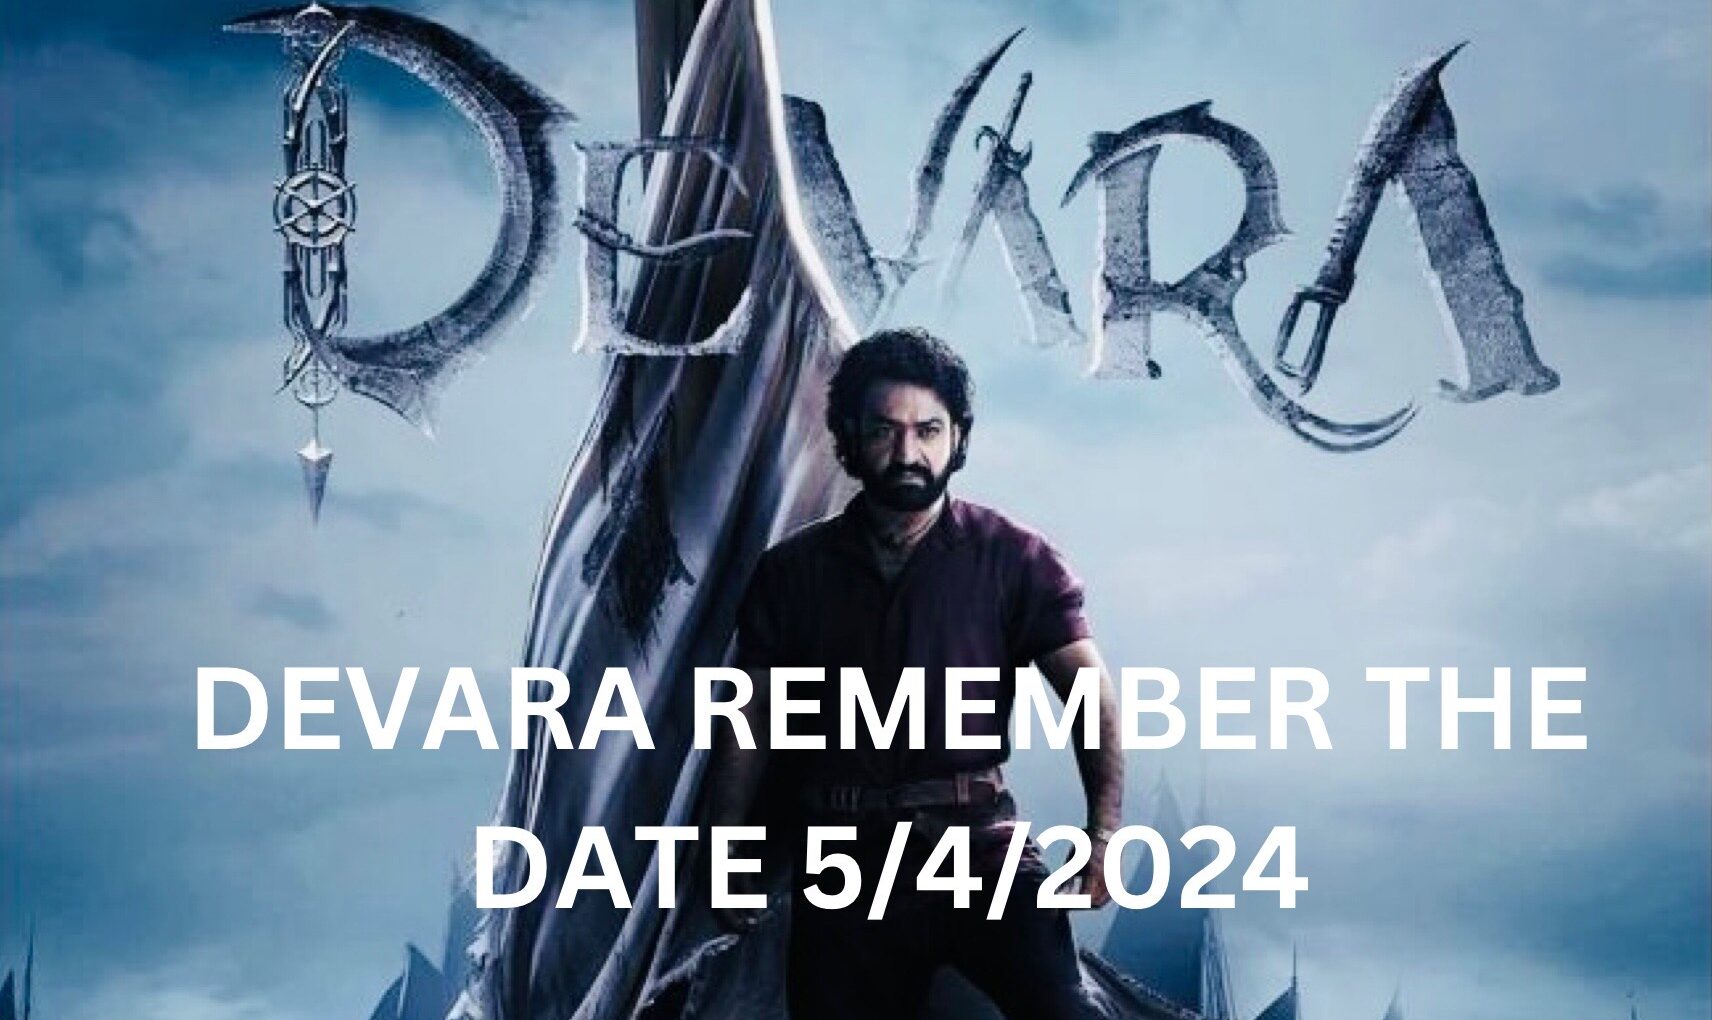 "NTR Devara: The Must-Watch Telugu Movie of 2024 Starring Janhvi Kapoor, Set to Release on April 5, 2024"